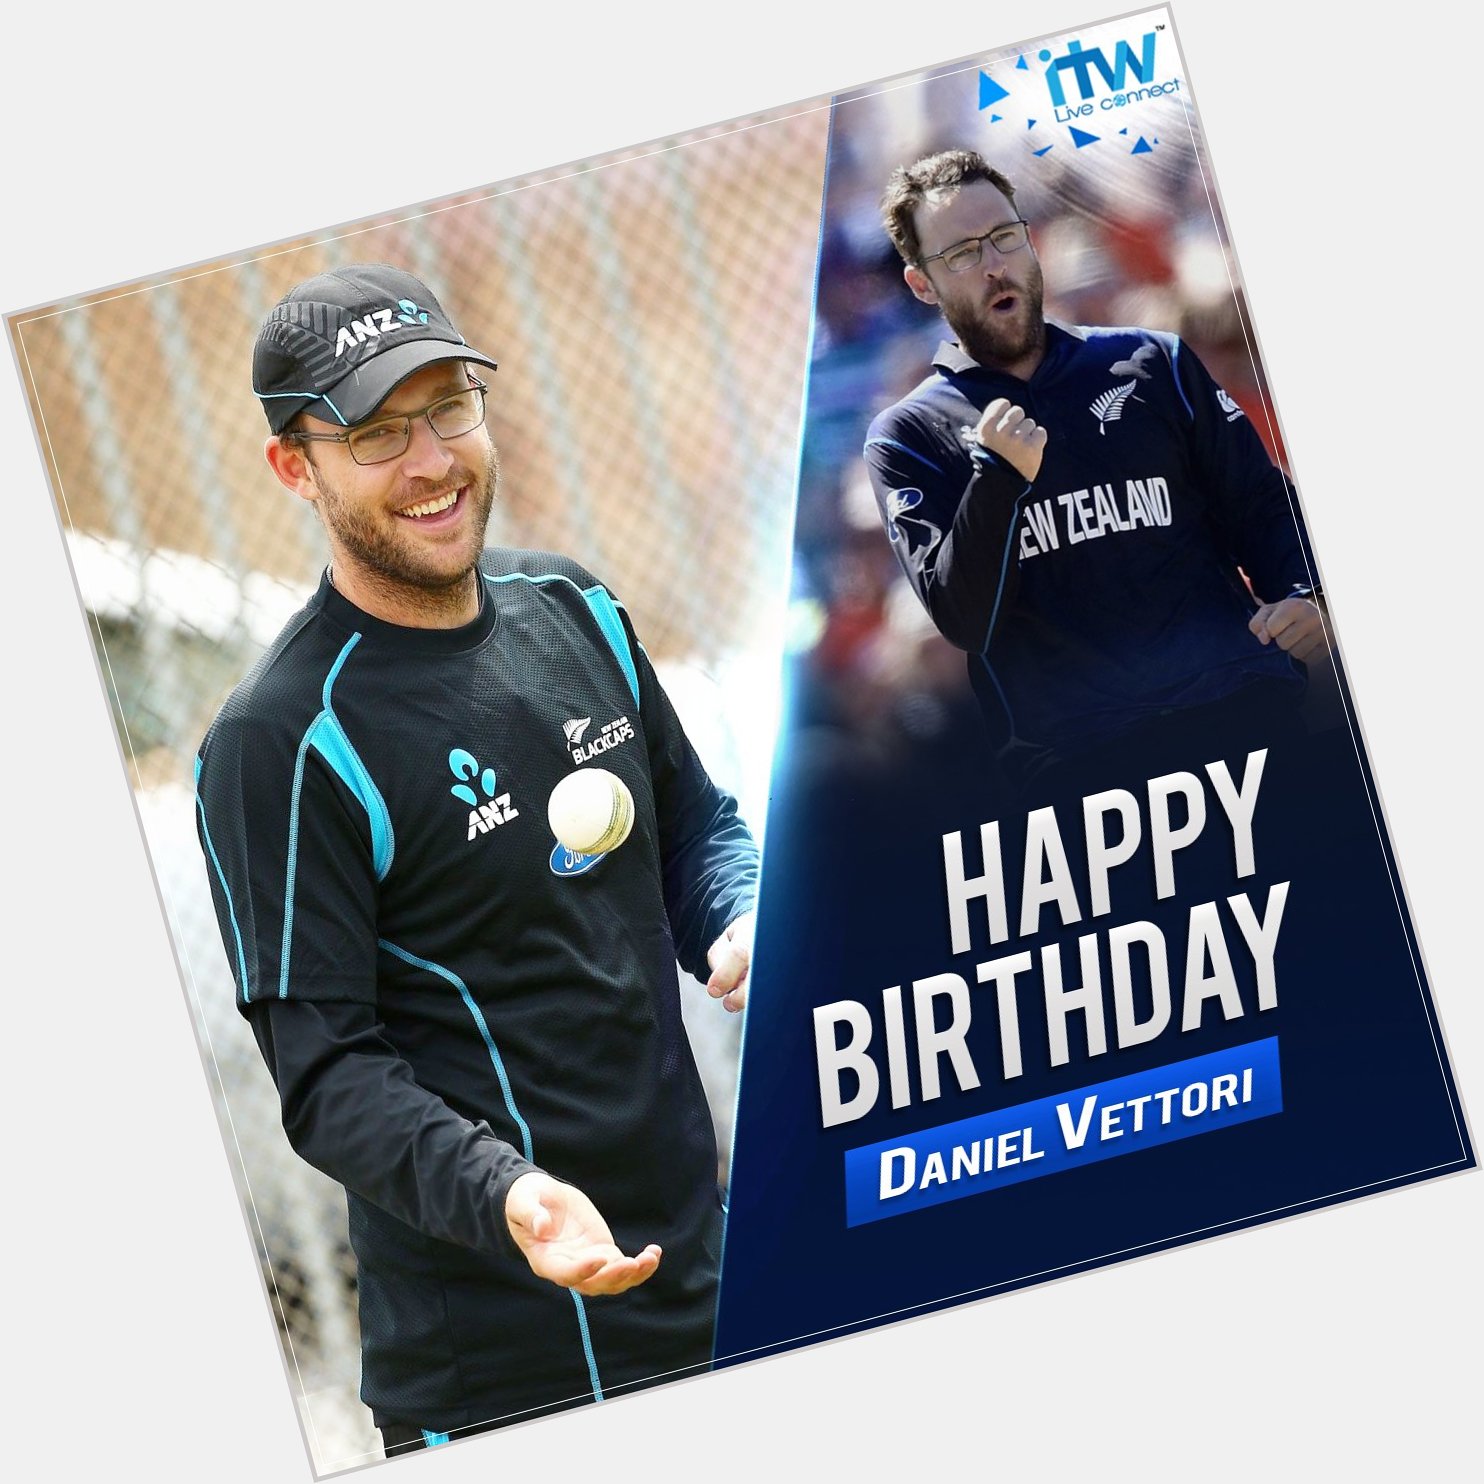  Happy Birthday to legend Daniel Vettori. 